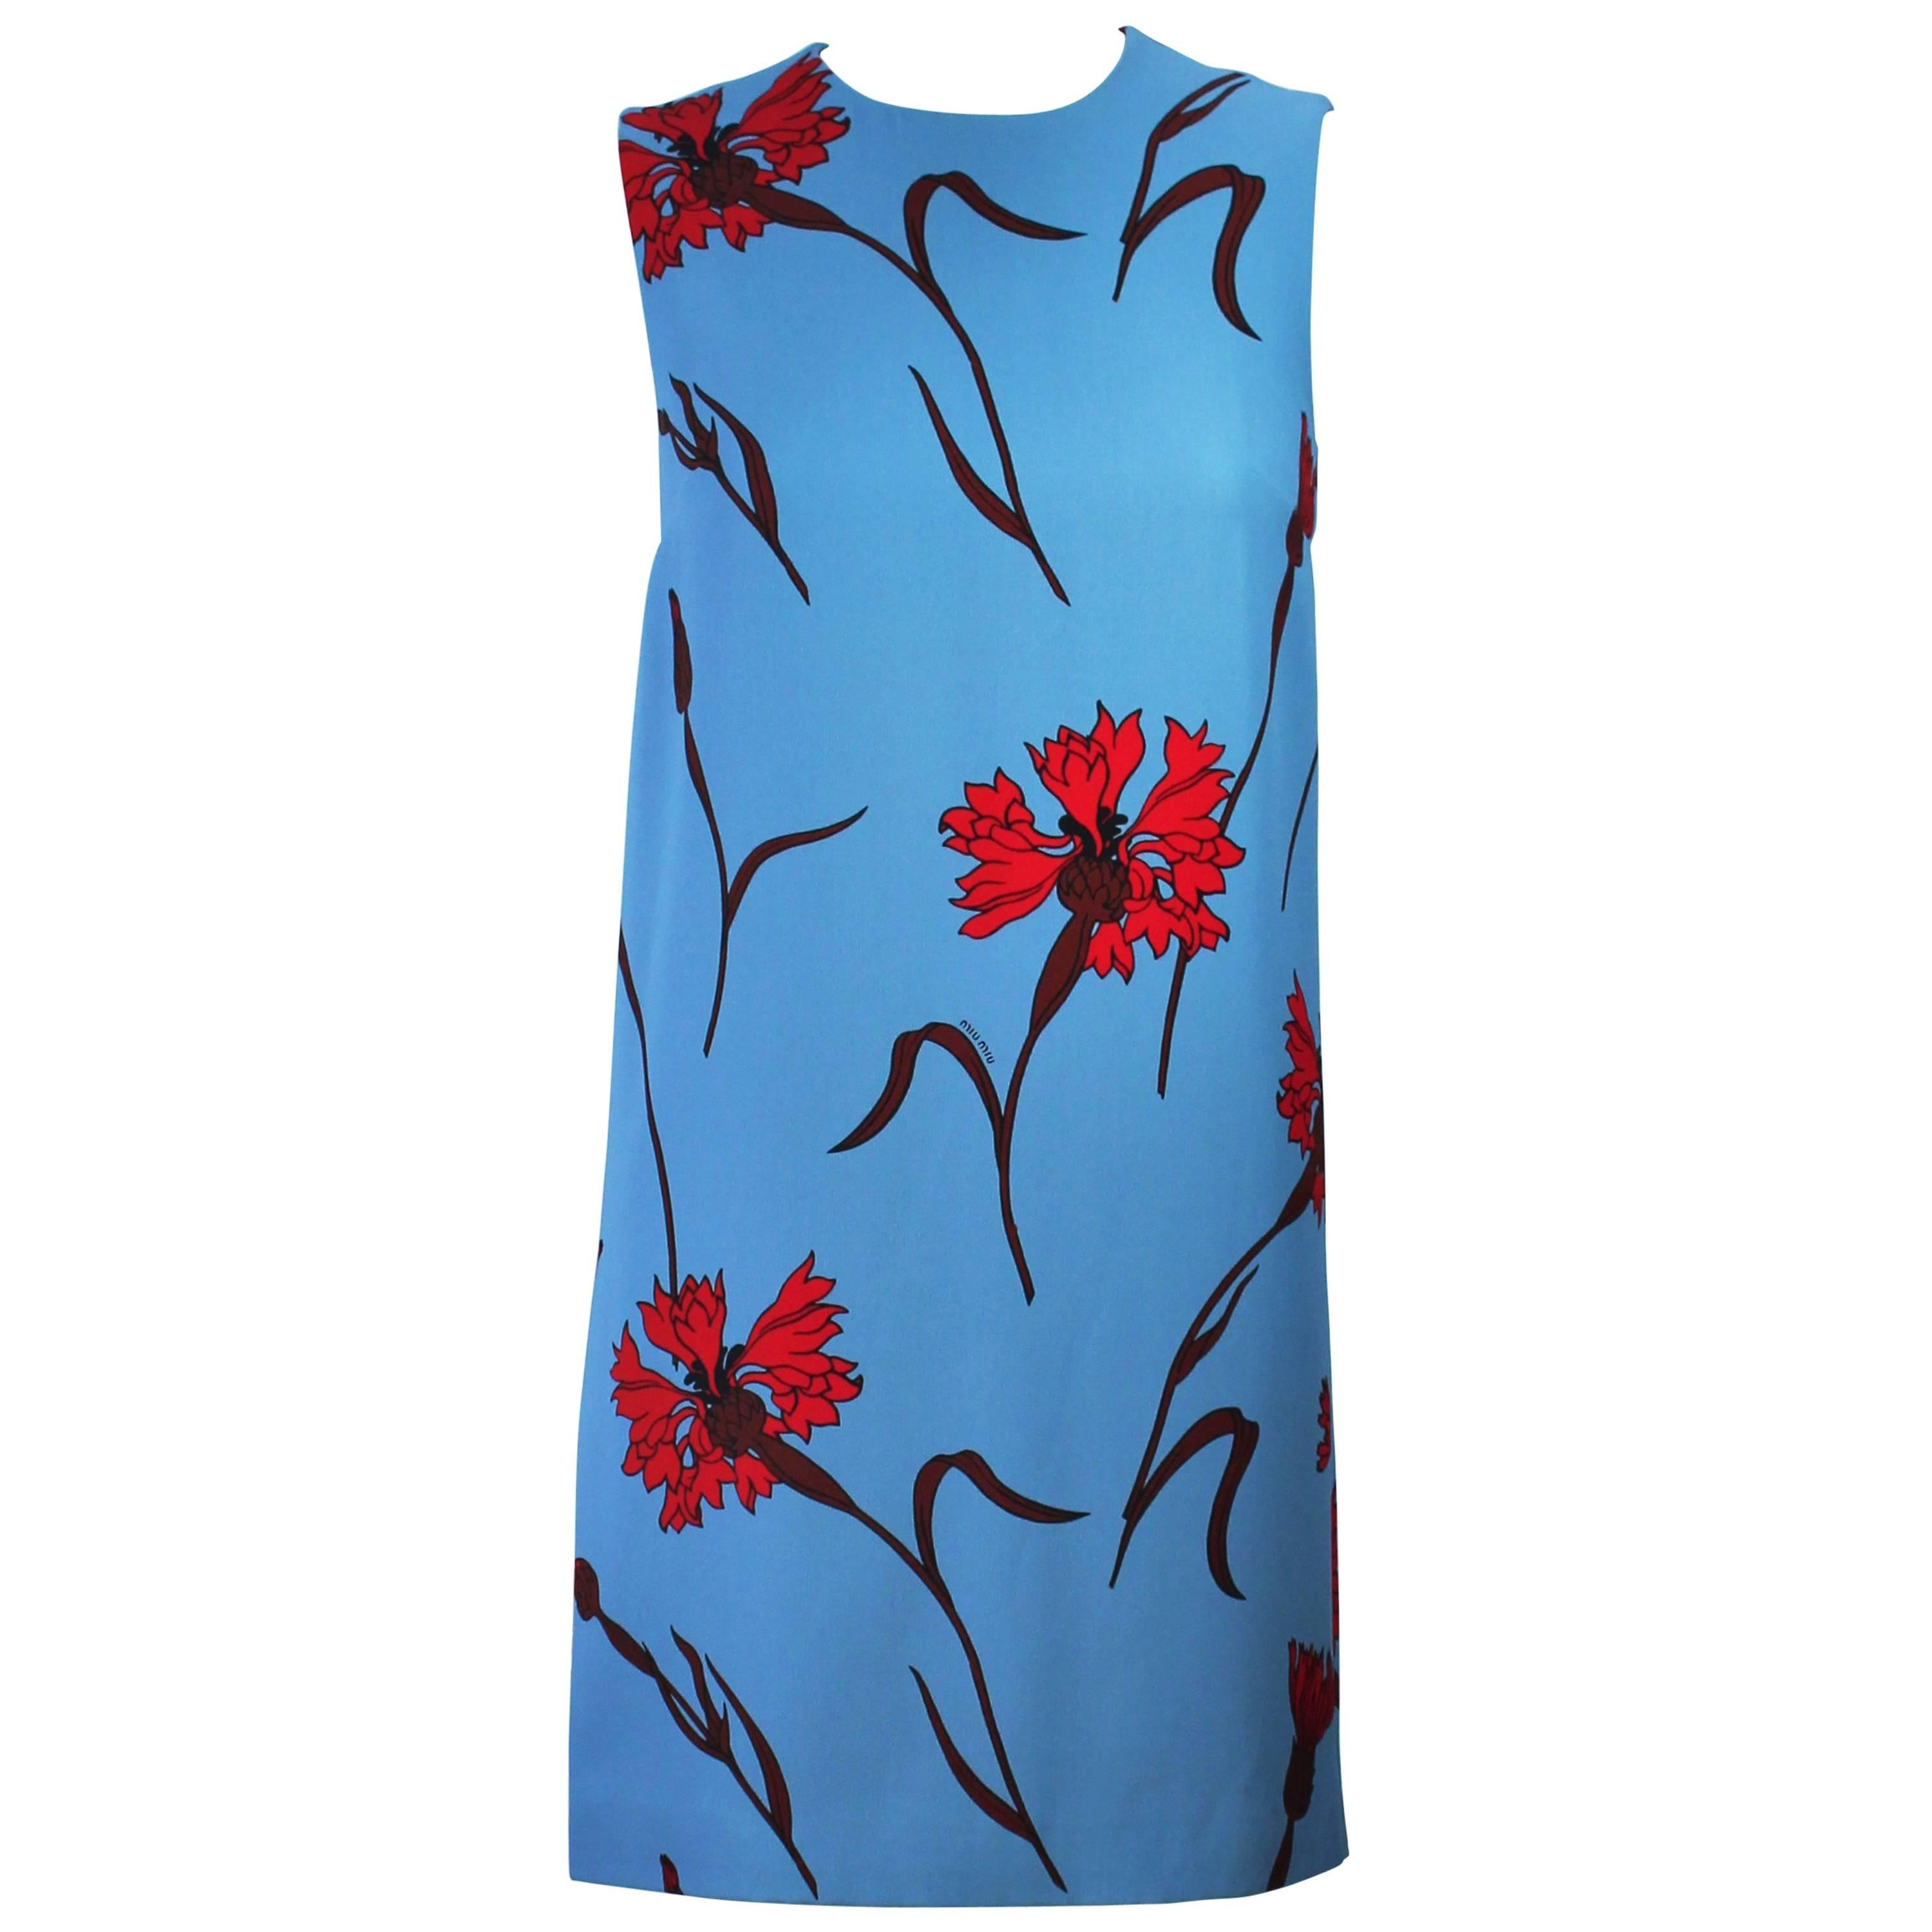 MIU MIU Blue with Red Floral Print Shift Dress Size 36 NWT